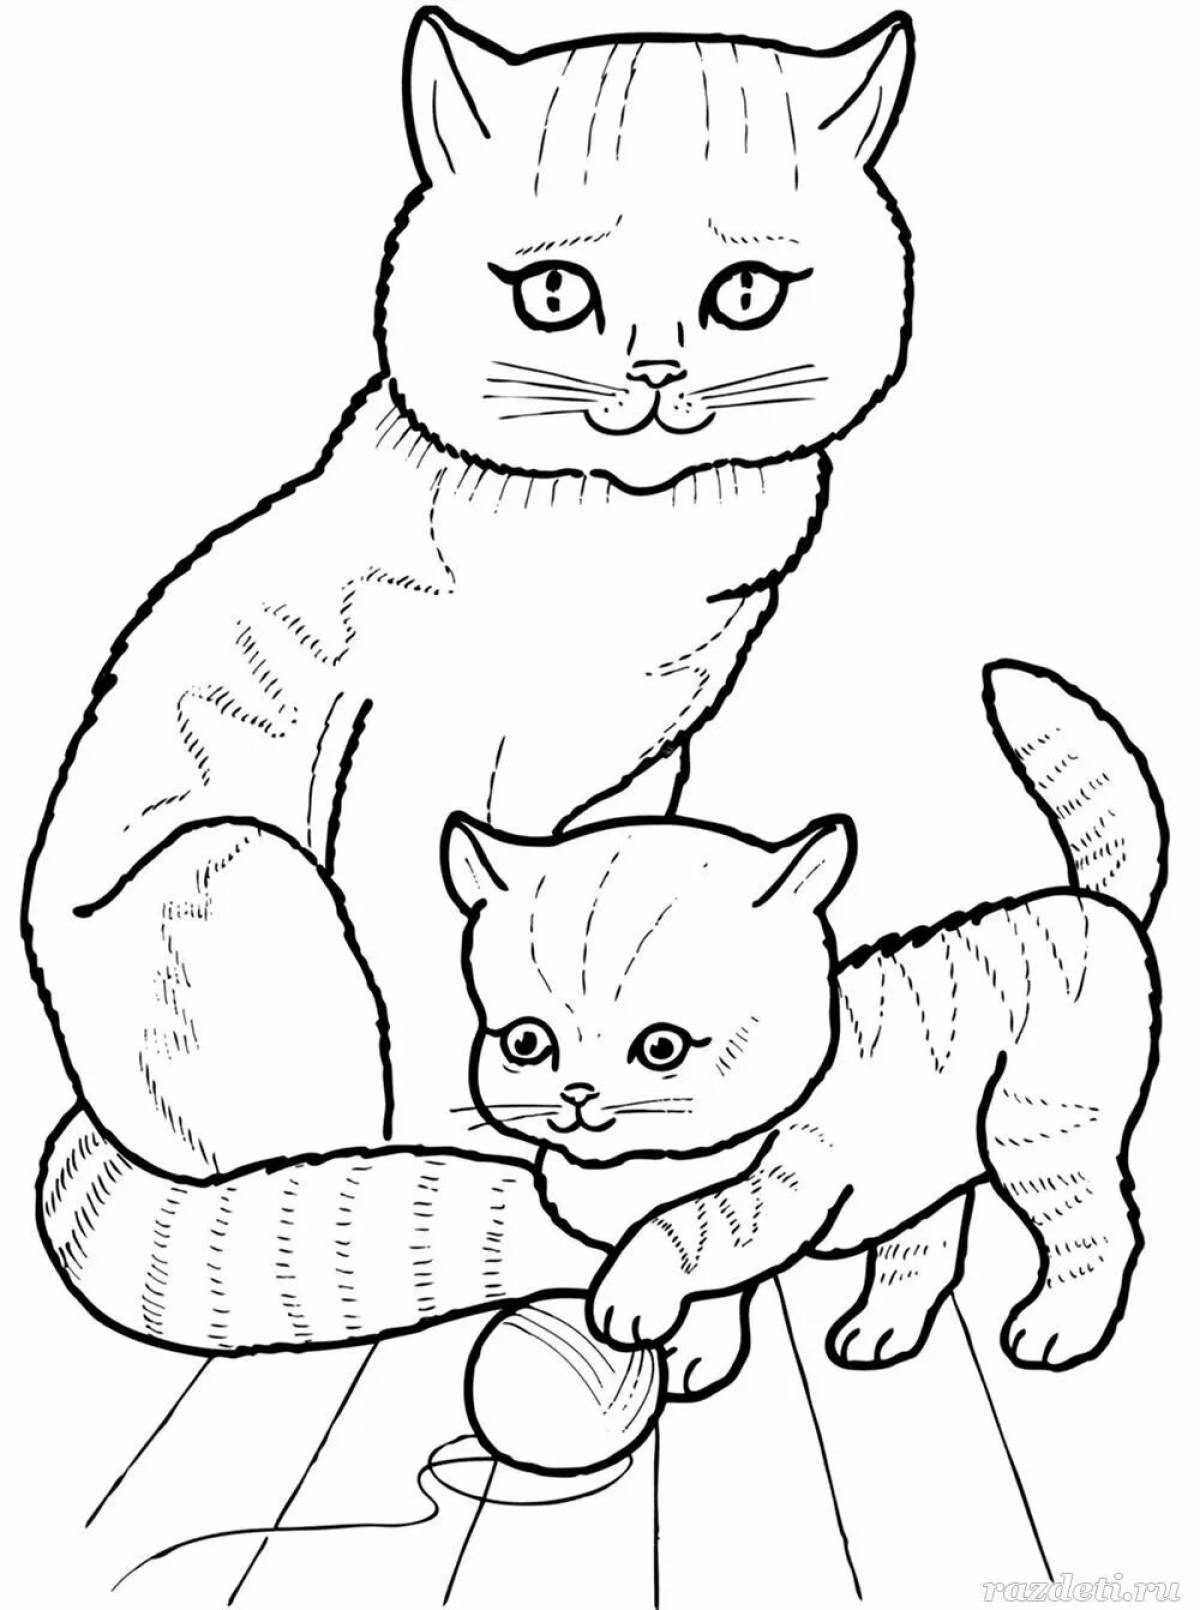 Раскраска кошечка для детей 4 5. Котенок. Раскраска. Котенок раскраска для детей. Раскраска кошка с котятами. Кошечка раскраска для детей.